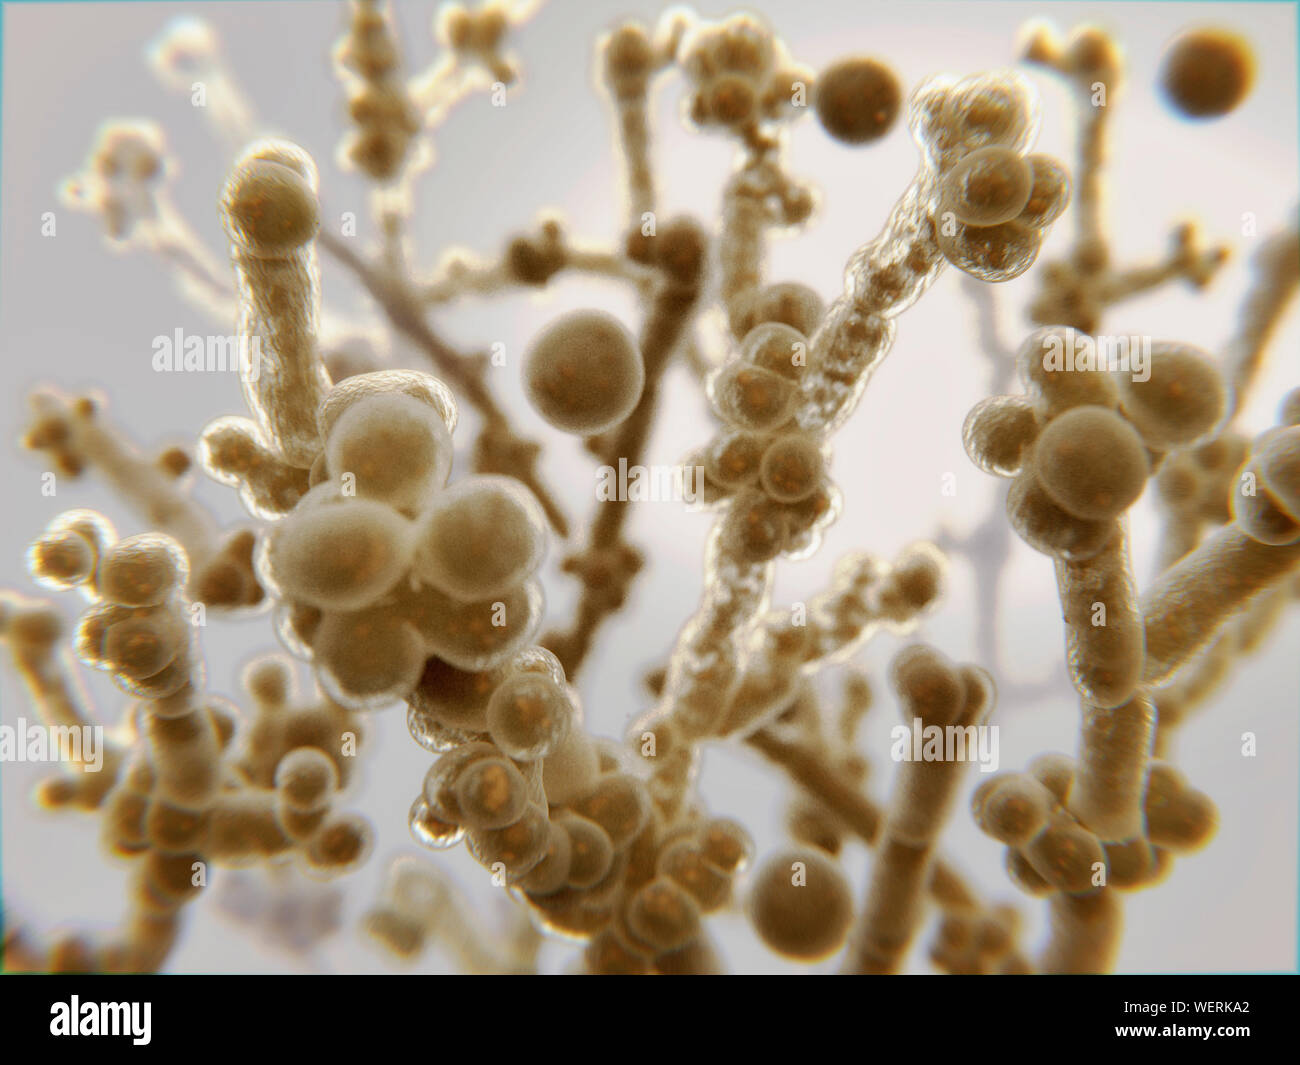 Candida yeast, illustration Stock Photo